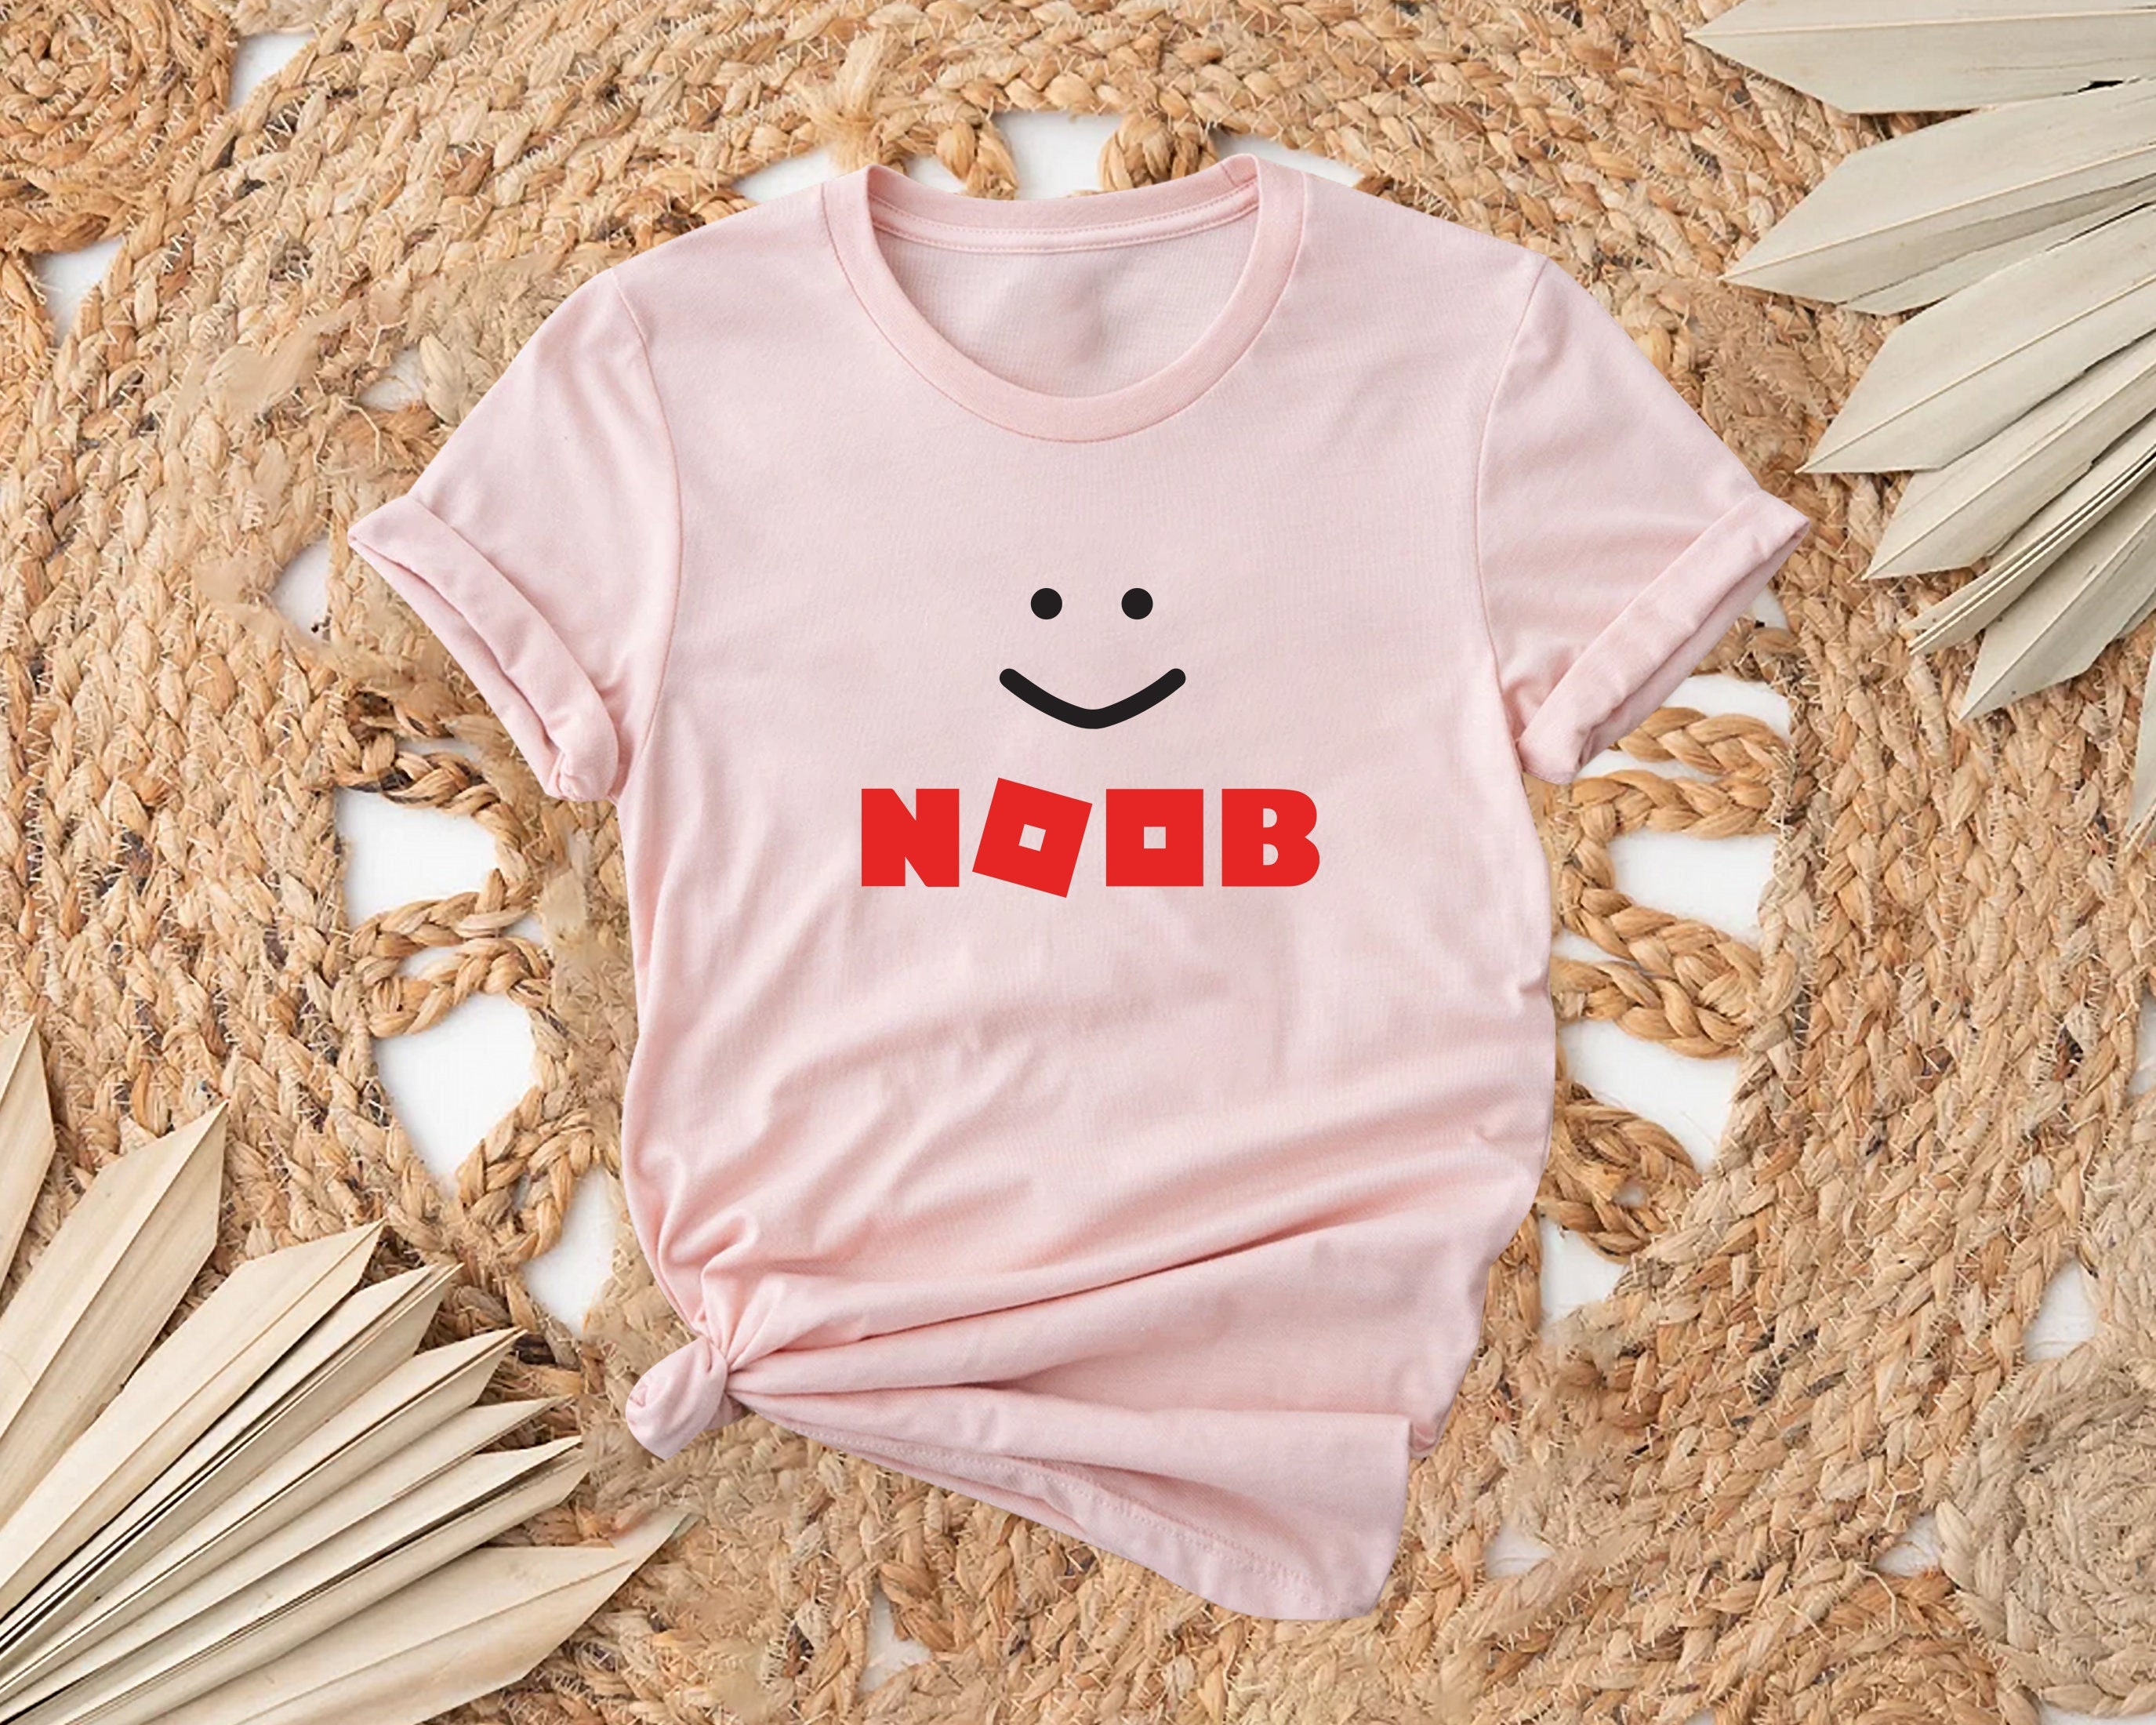 Saber Simulator Noob T Shirts, Hoodies, Sweatshirts & Merch